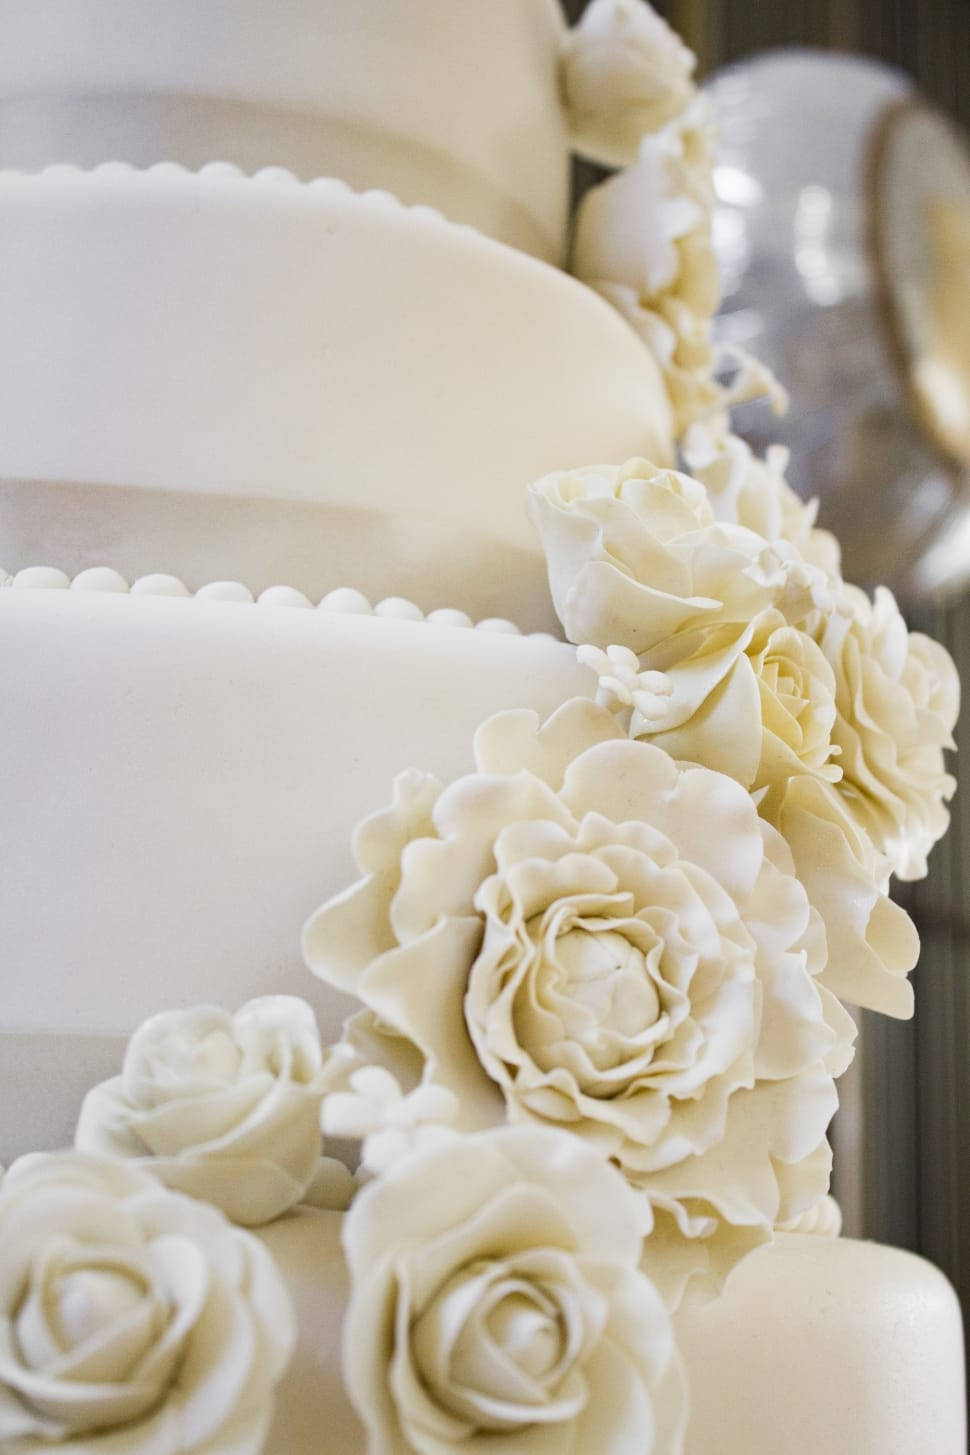 White Chiffon Roses Wedding Cake Wallpaper